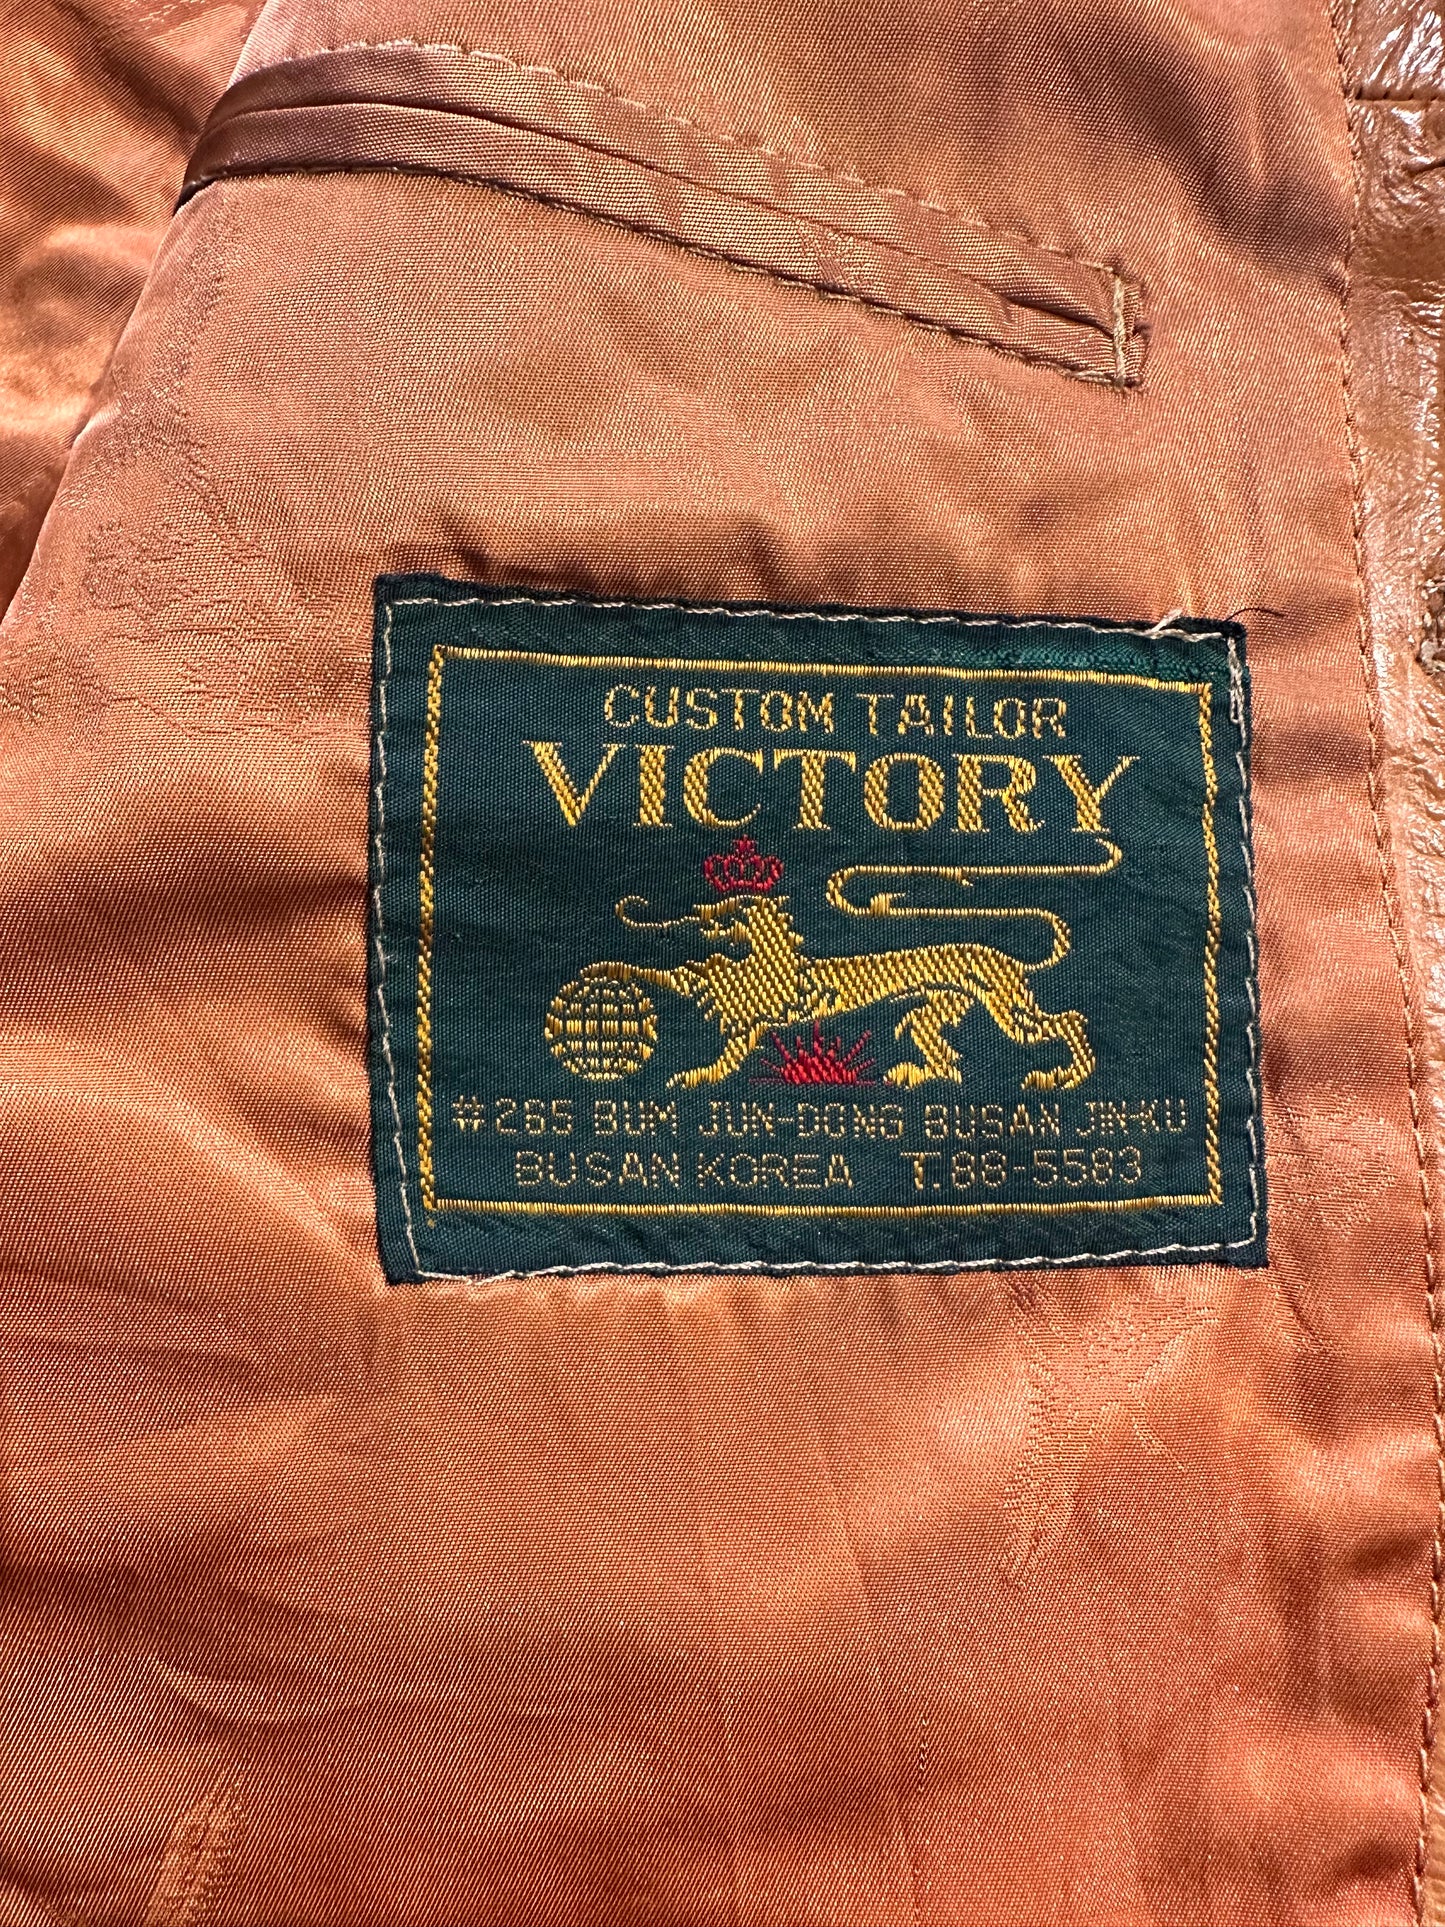 70s 'Victory' Snakeskin Vest / Medium